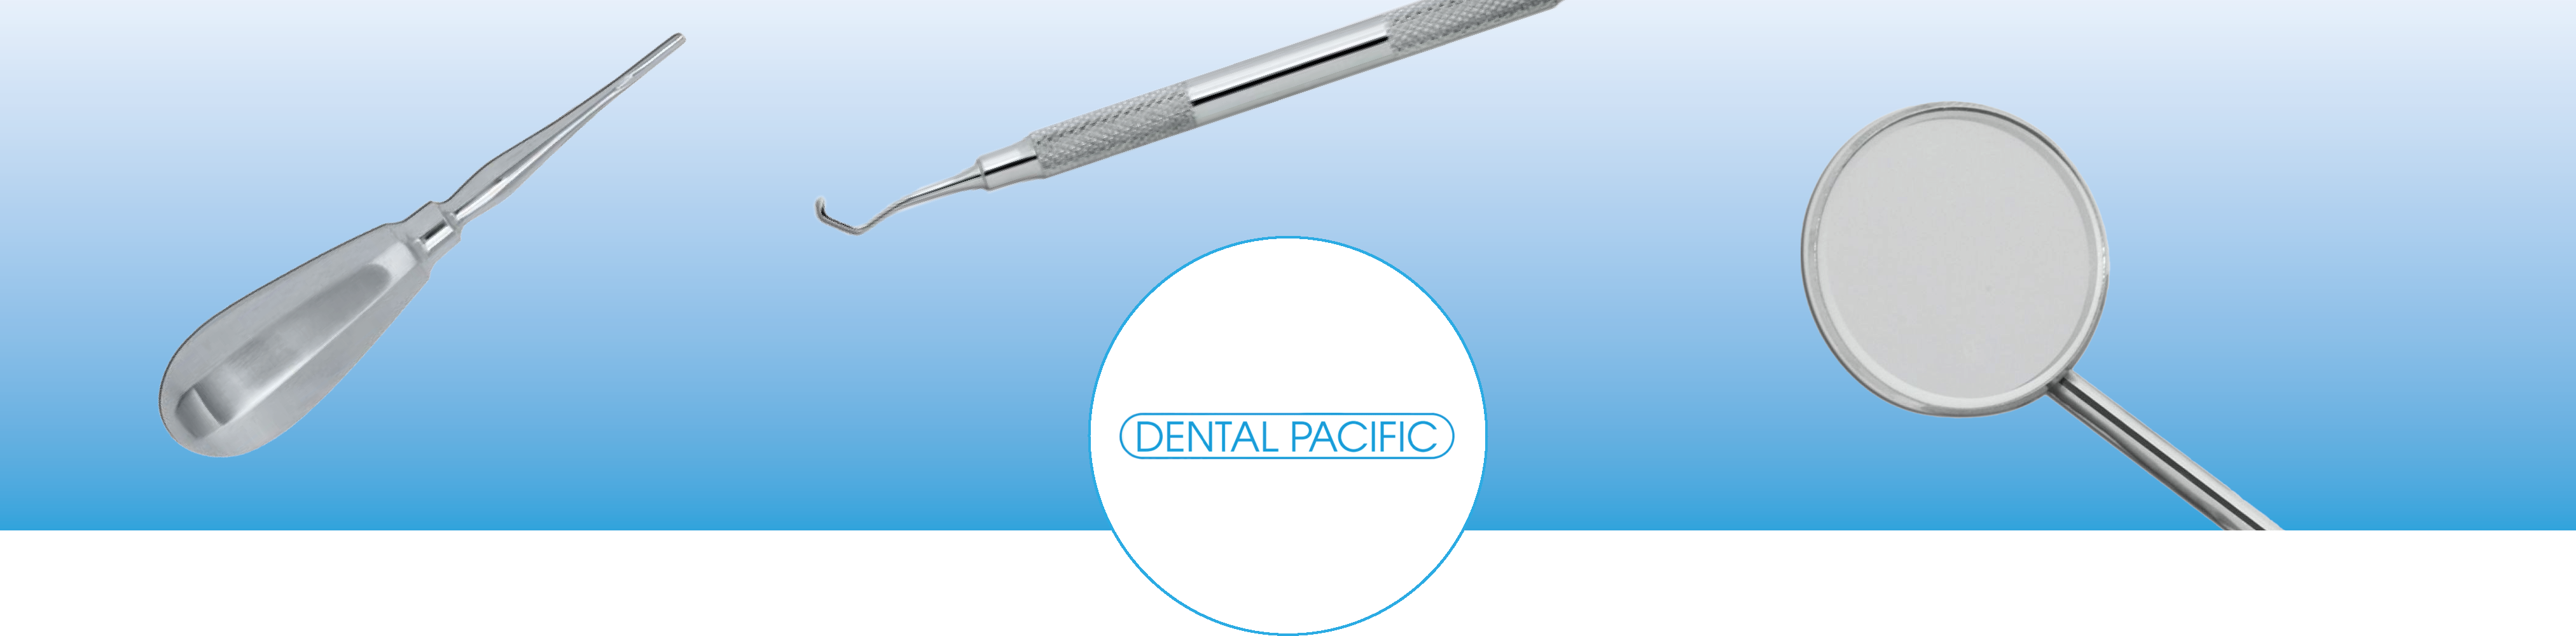 banner_dental_pacific